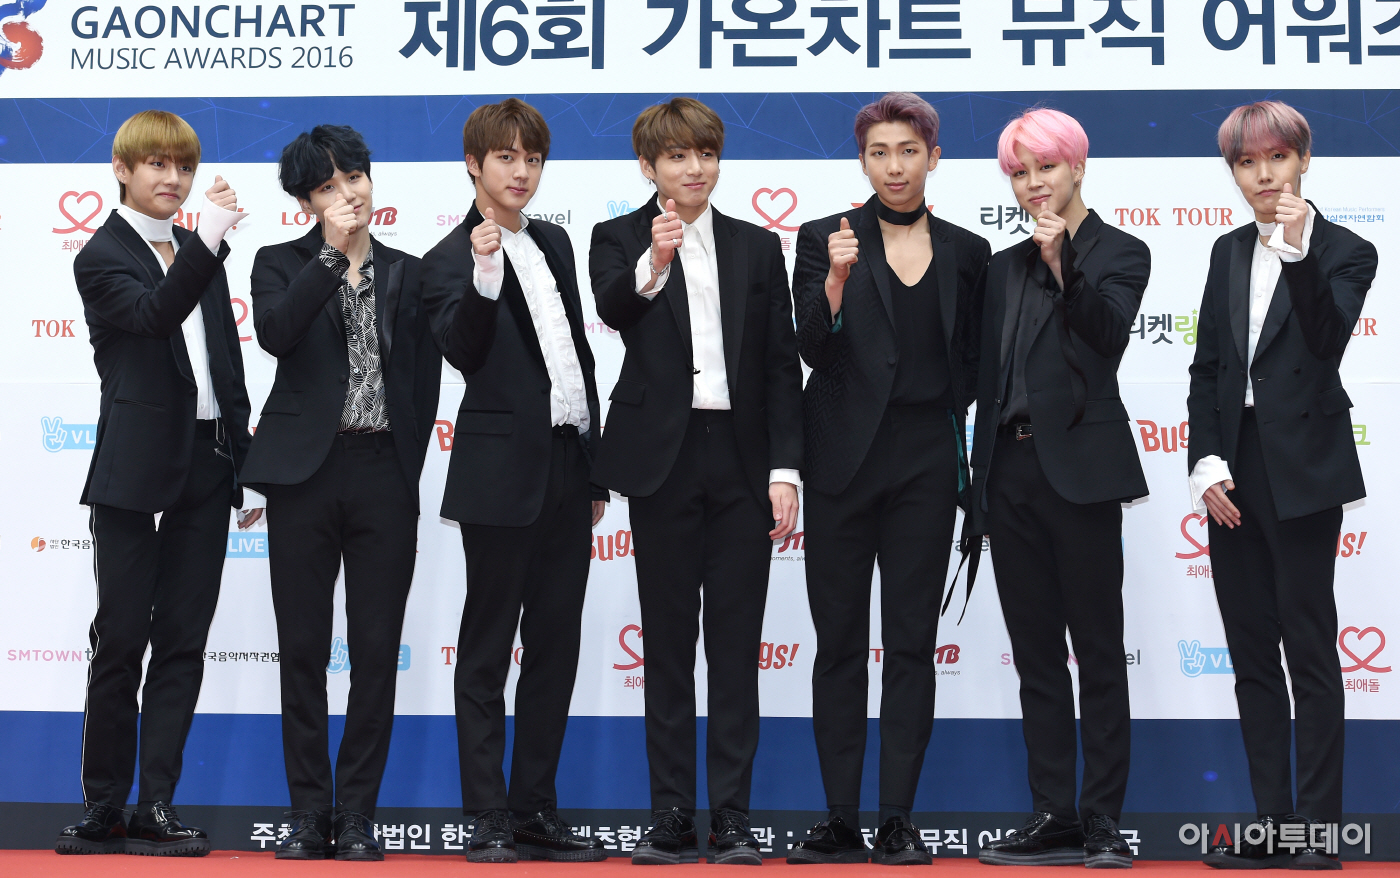 6th Gaon Chart Music Awards 2017